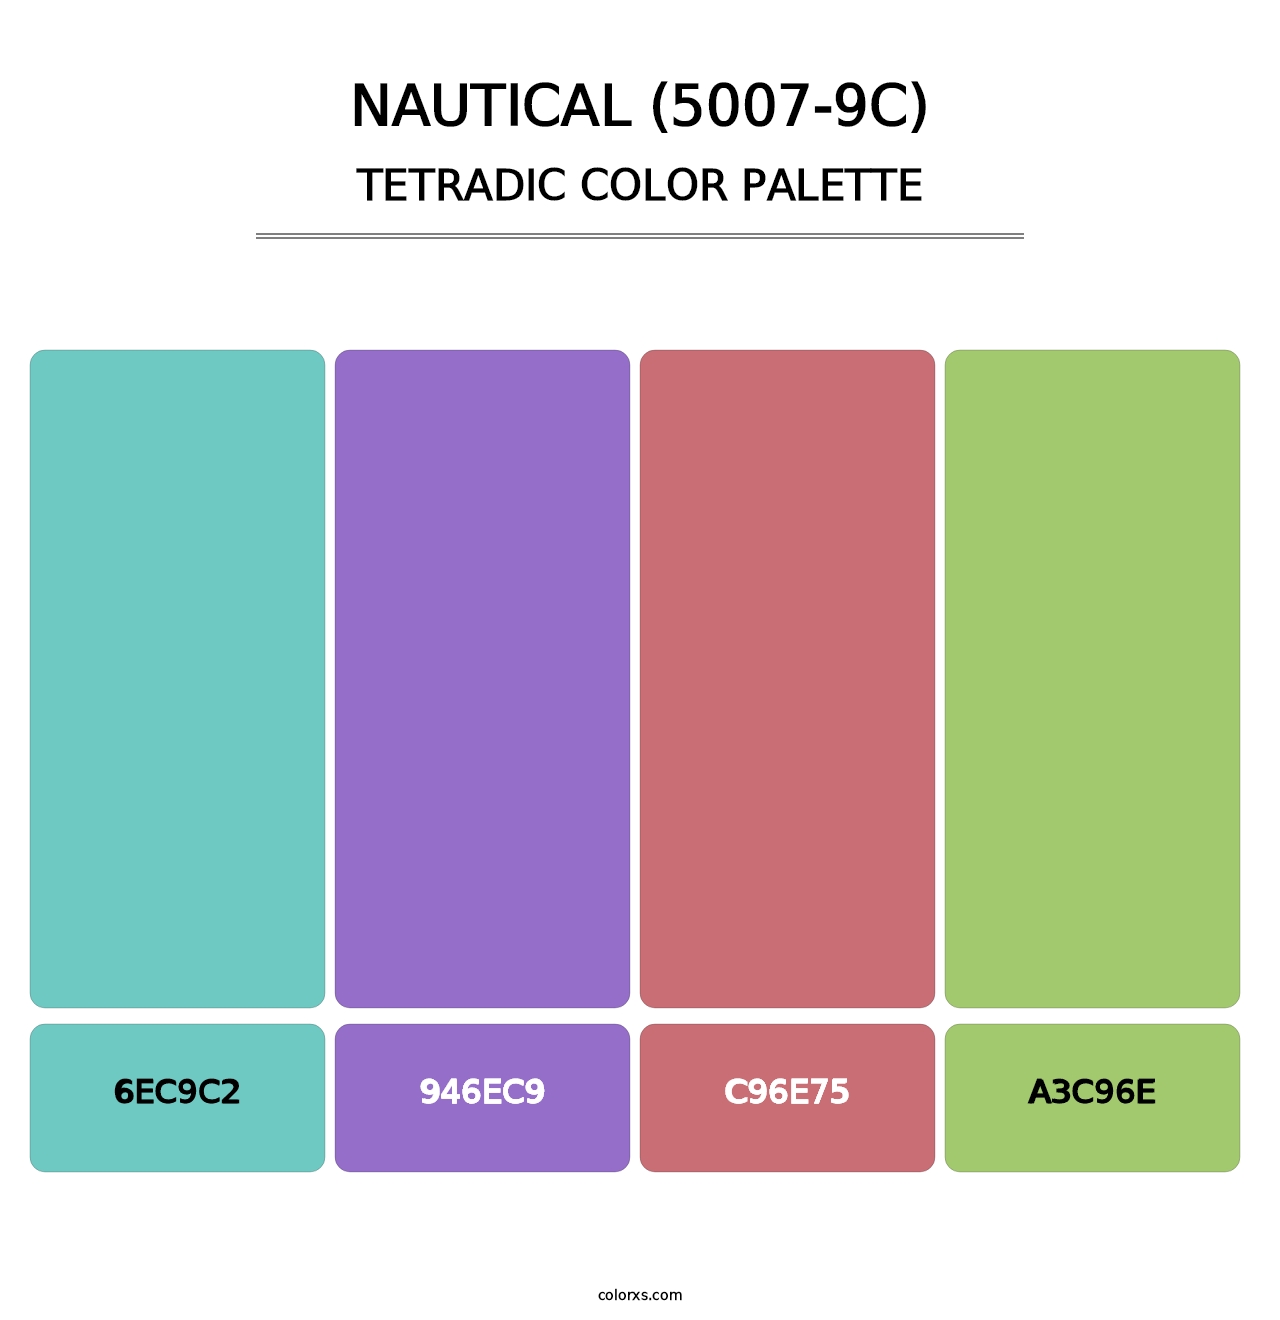 Nautical (5007-9C) - Tetradic Color Palette